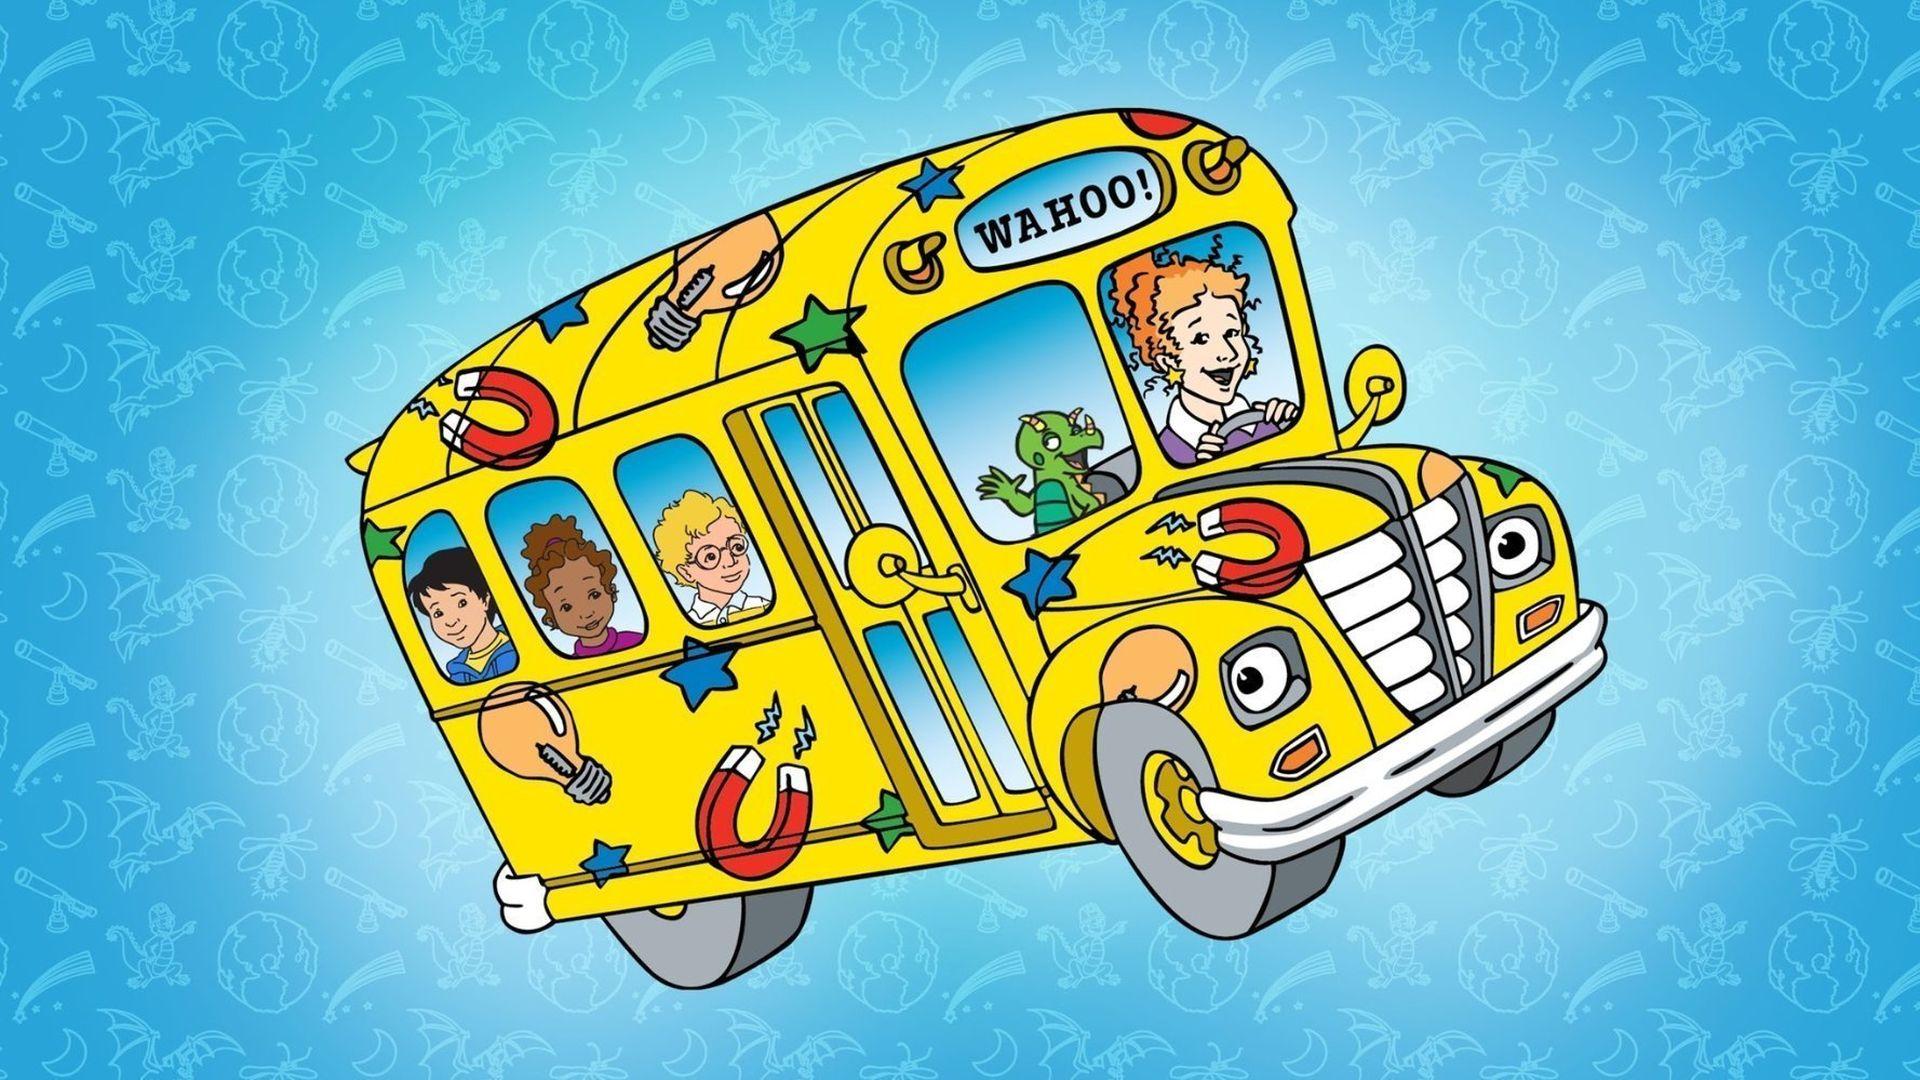 magic school bus theme song lyrics